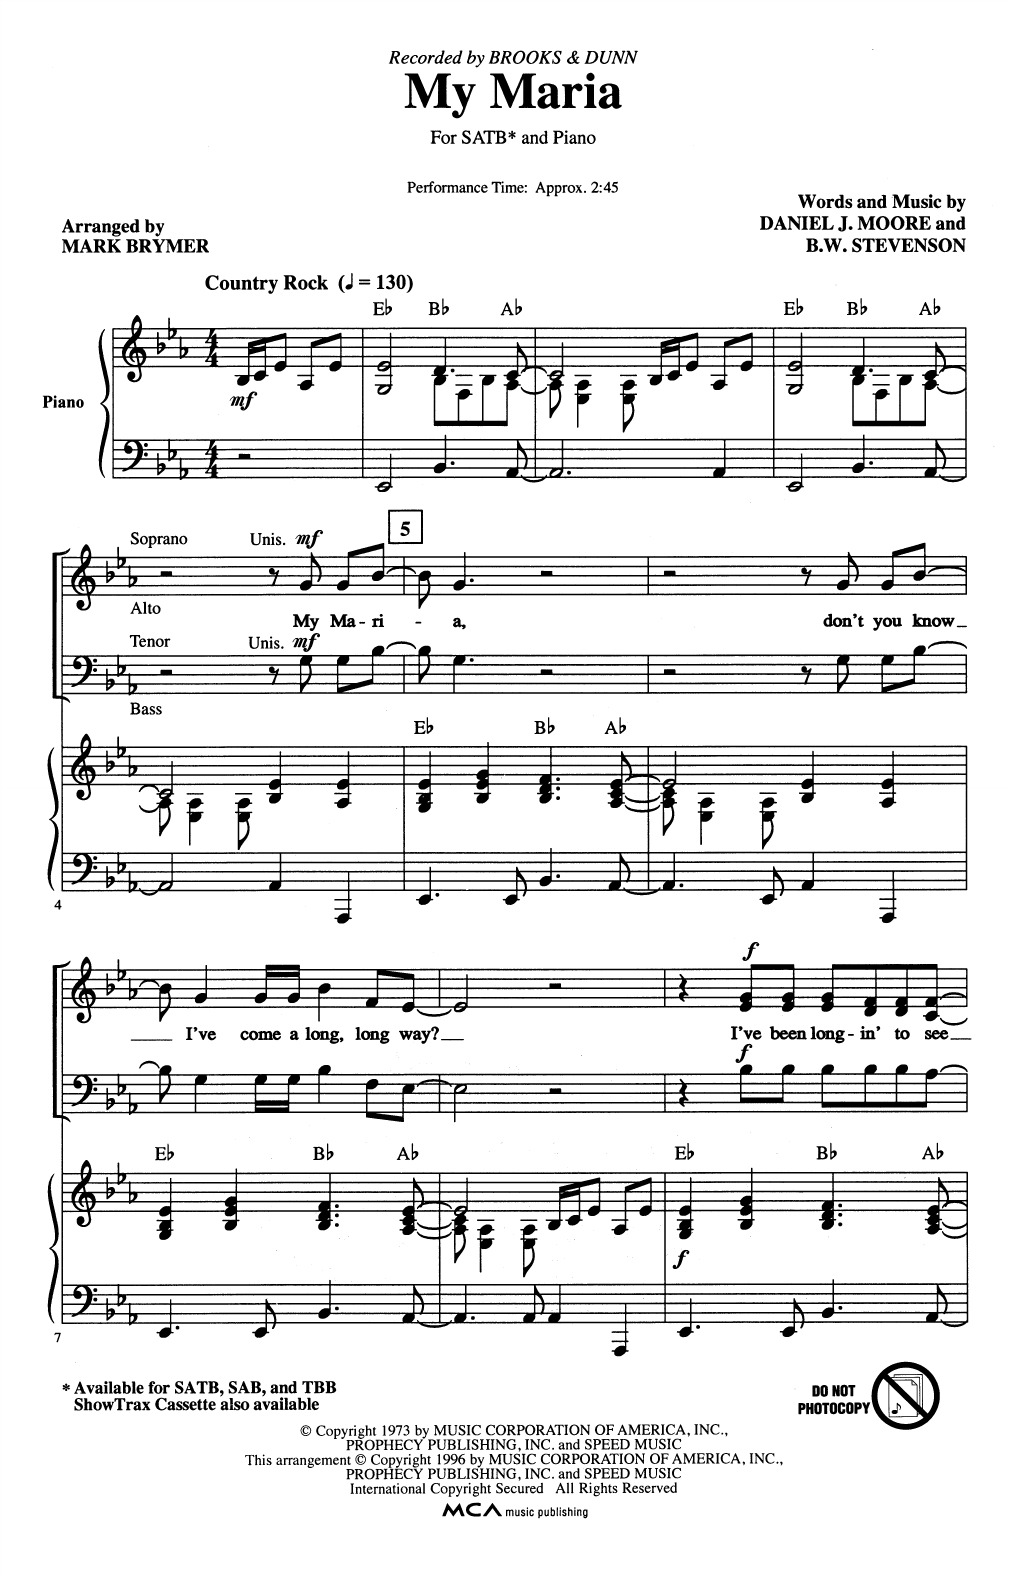 Brooks & Dunn My Maria (arr. Mark Brymer) Sheet Music Notes & Chords for TBB Choir - Download or Print PDF